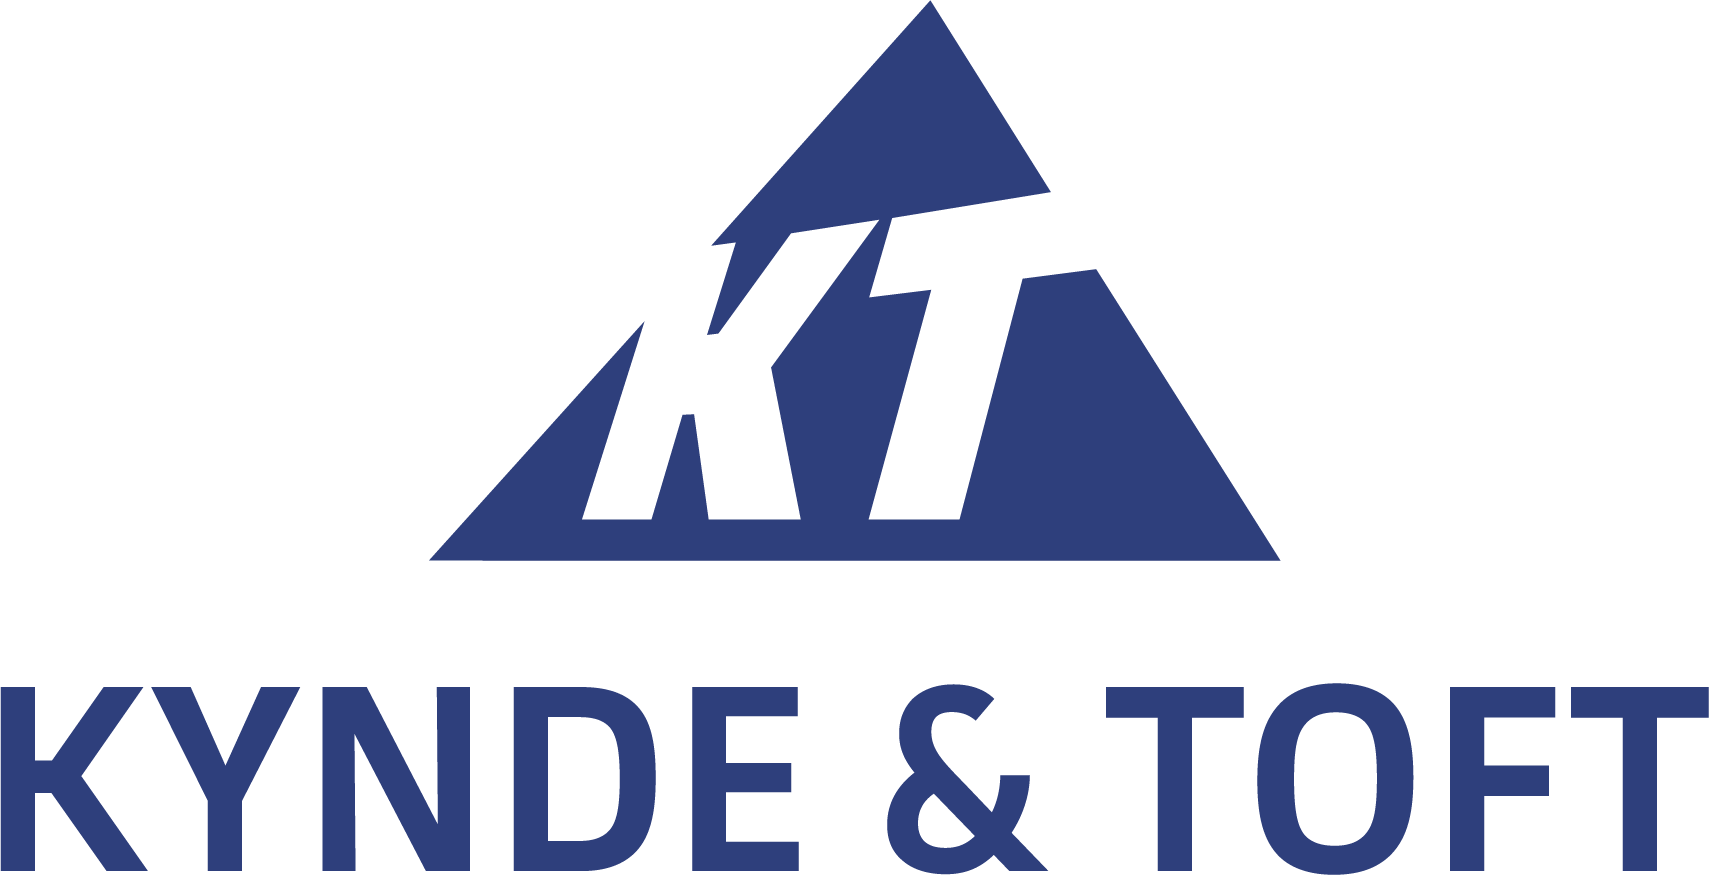 157 Kynde&Toft Logo1a Farve